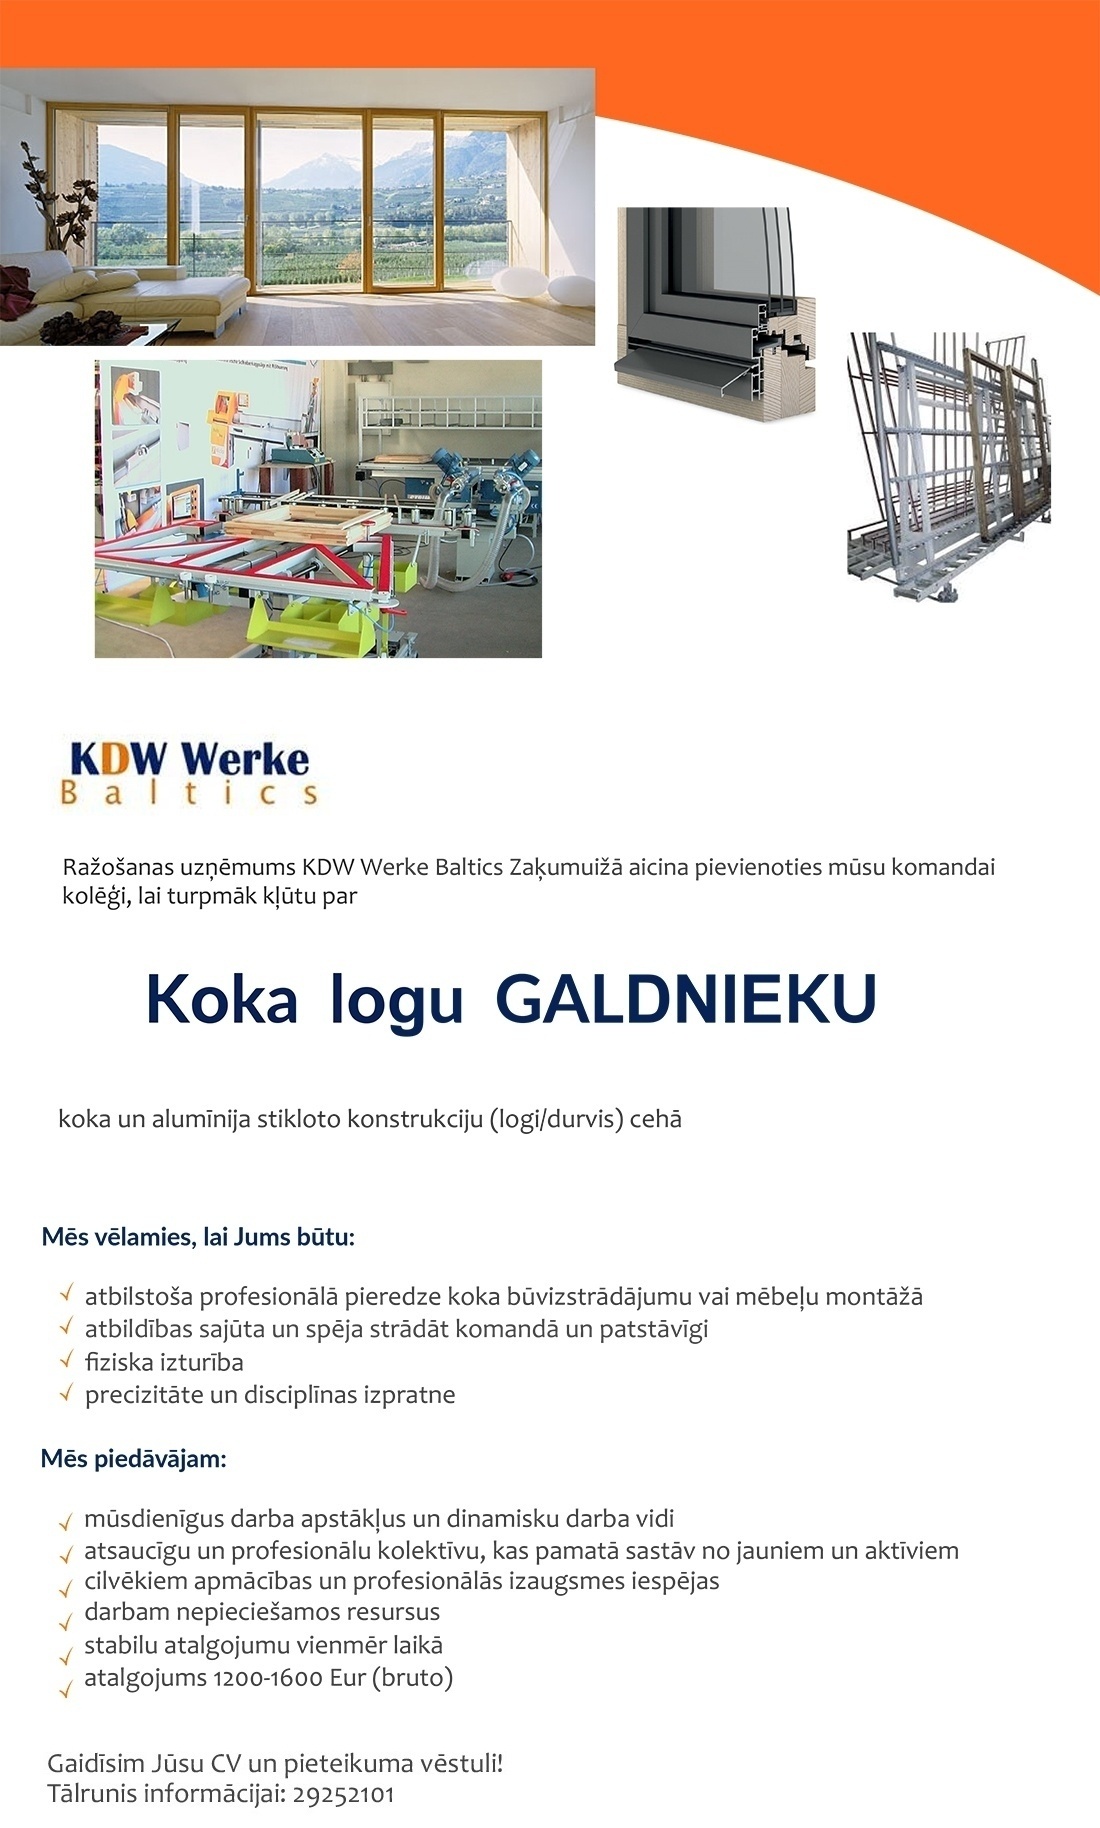 KDW Werke Baltics, SIA Koka logu galdnieks/-ce